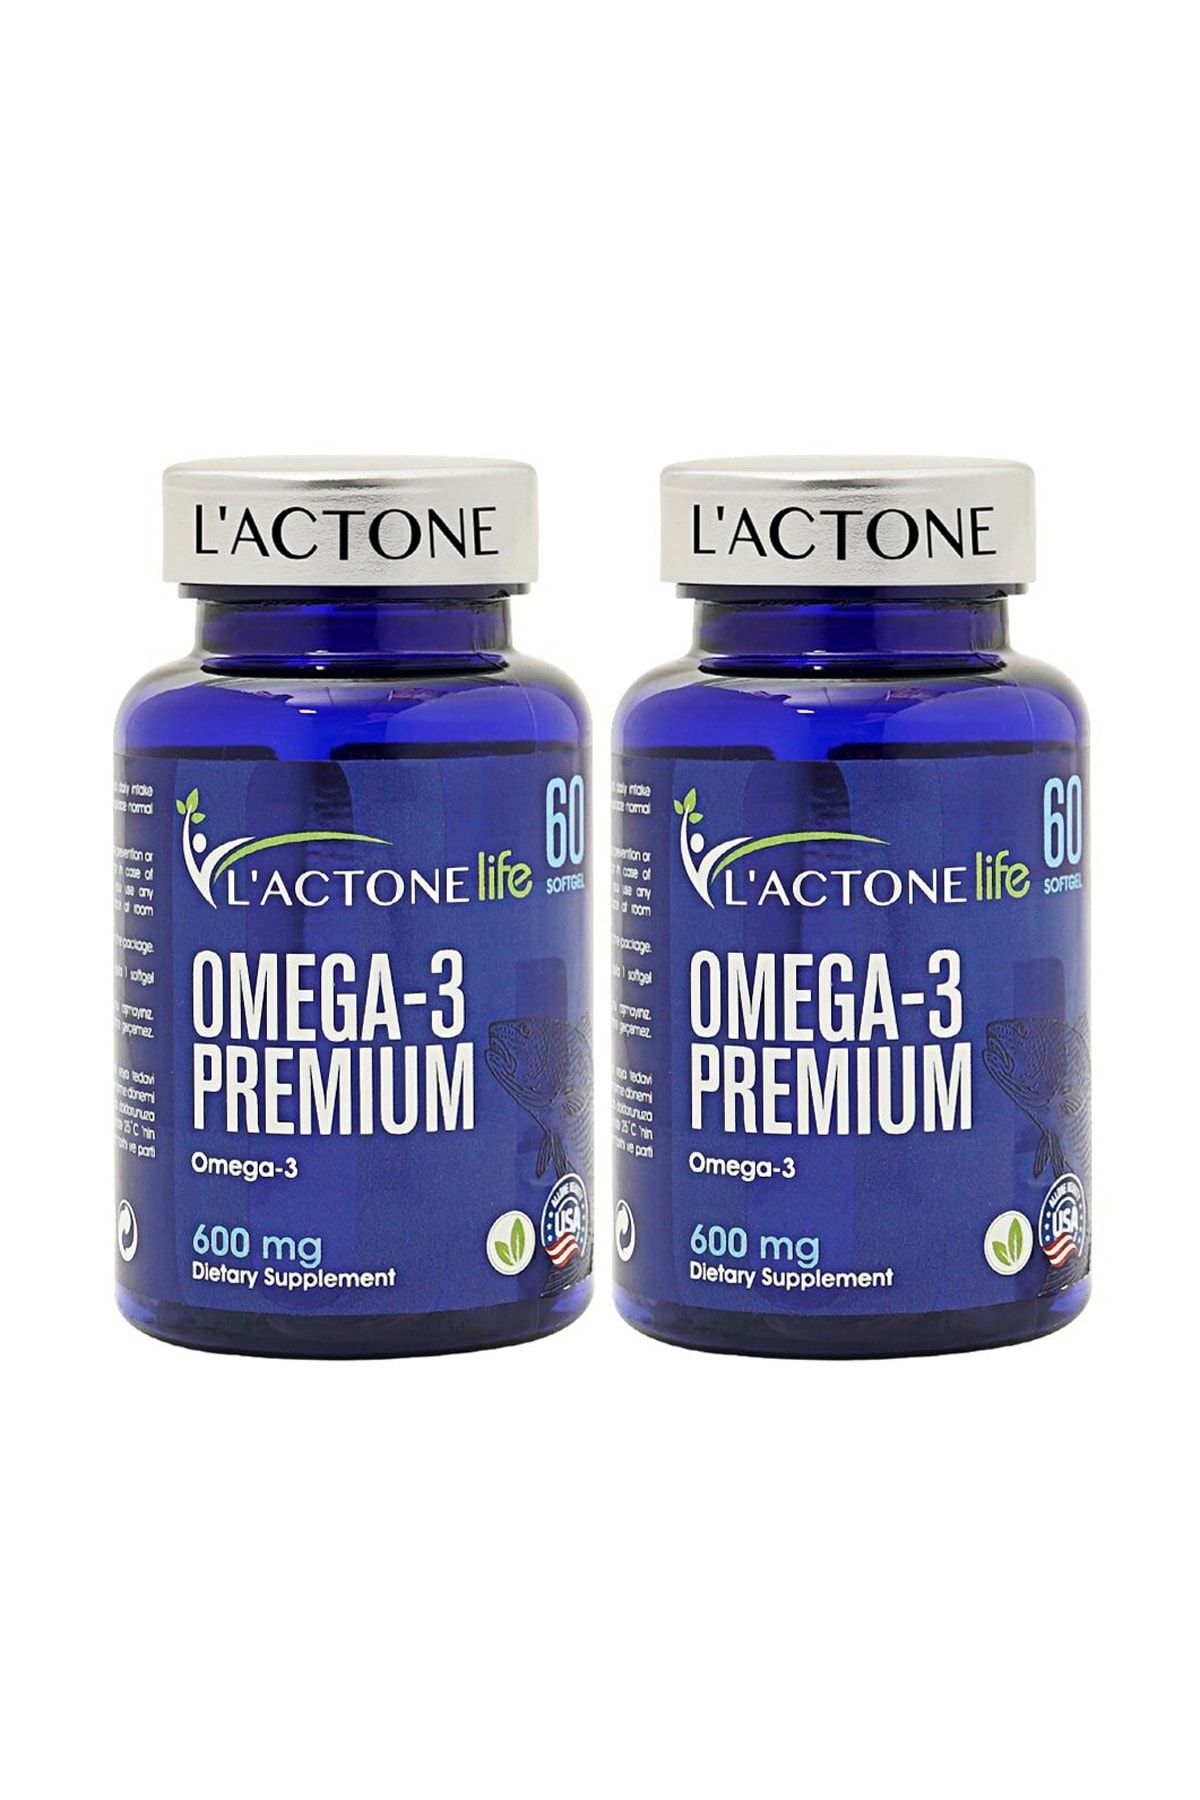 L'ACTONE Life Vitamin Omega-3 Softgel